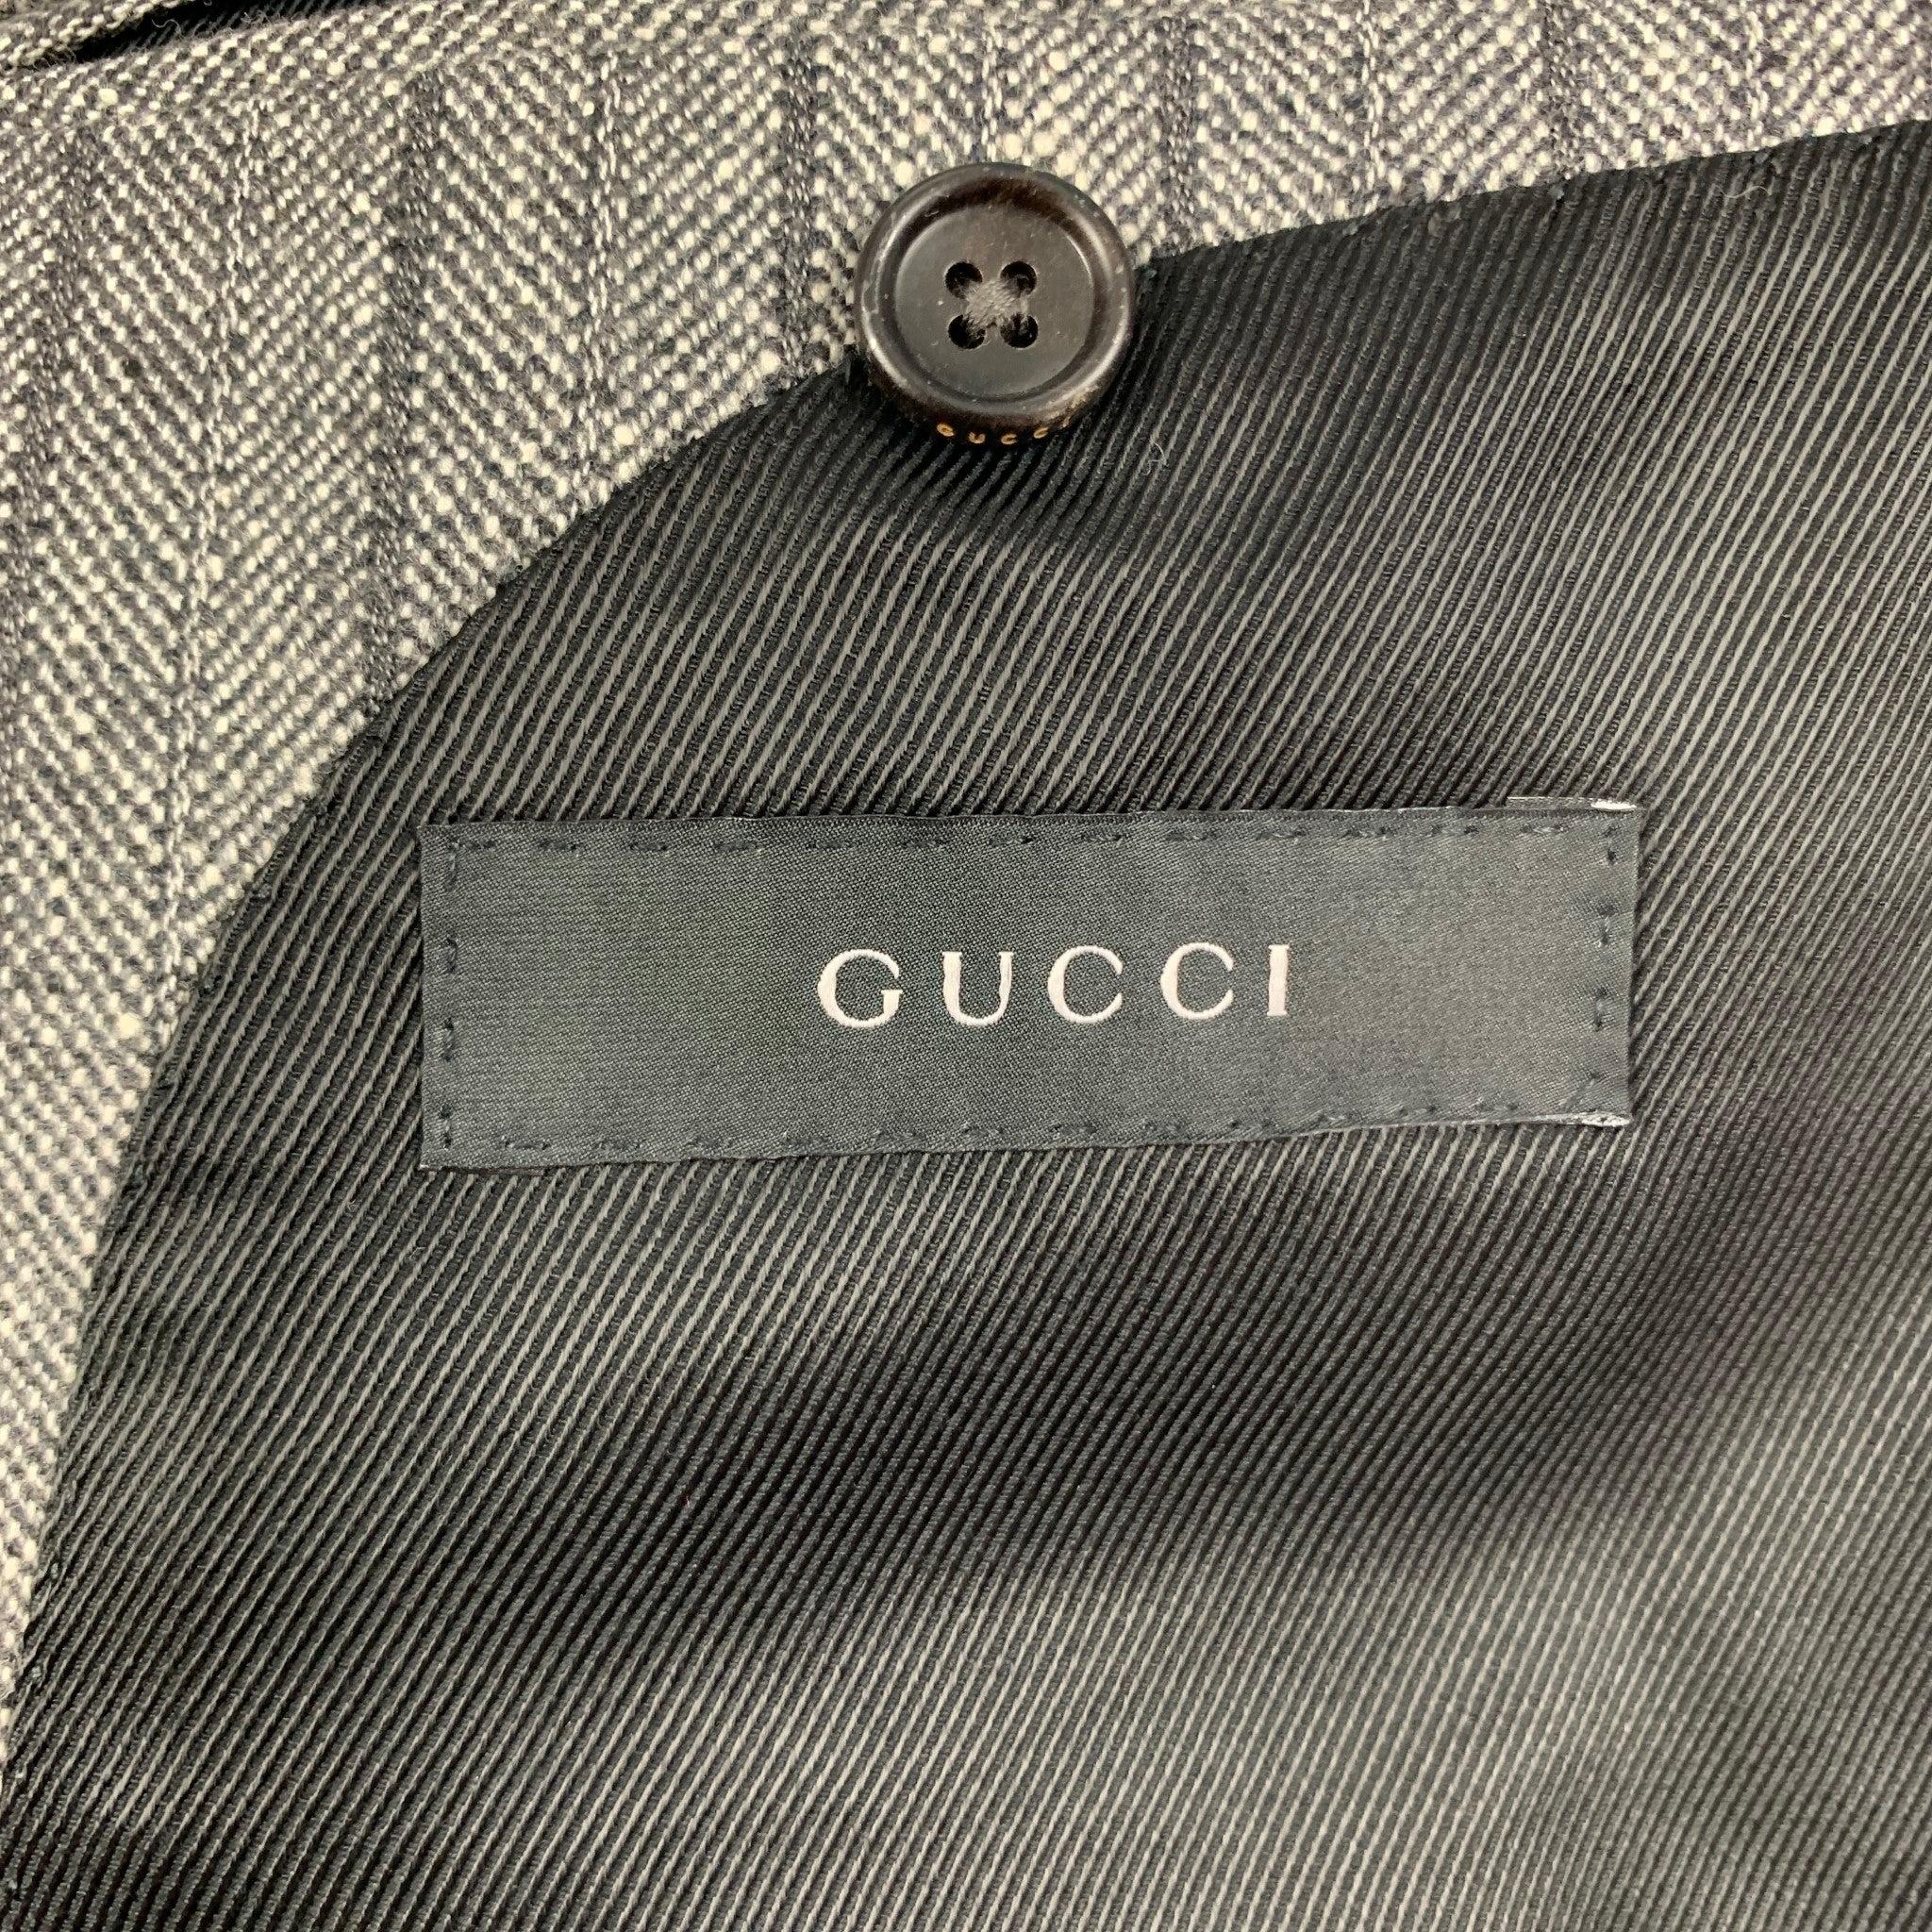 GUCCI Size 38 Grey Stripe Wool Blend Notch Lapel Suit For Sale 4